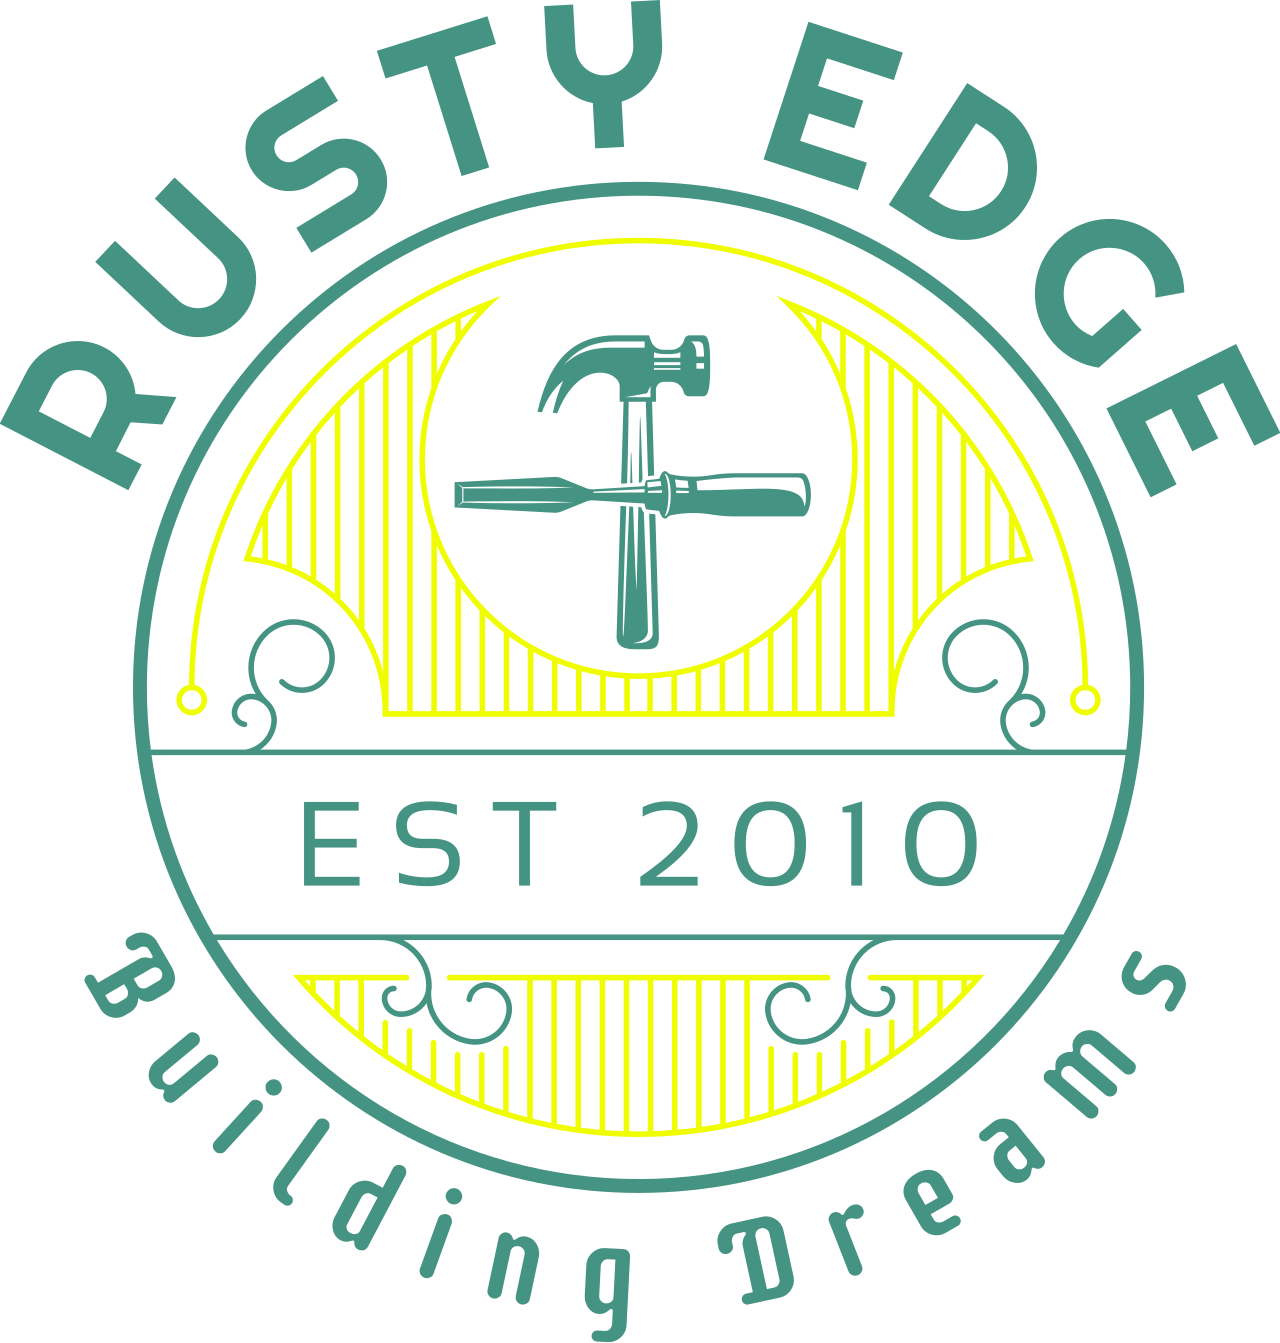 RUSTY EDGE's web page